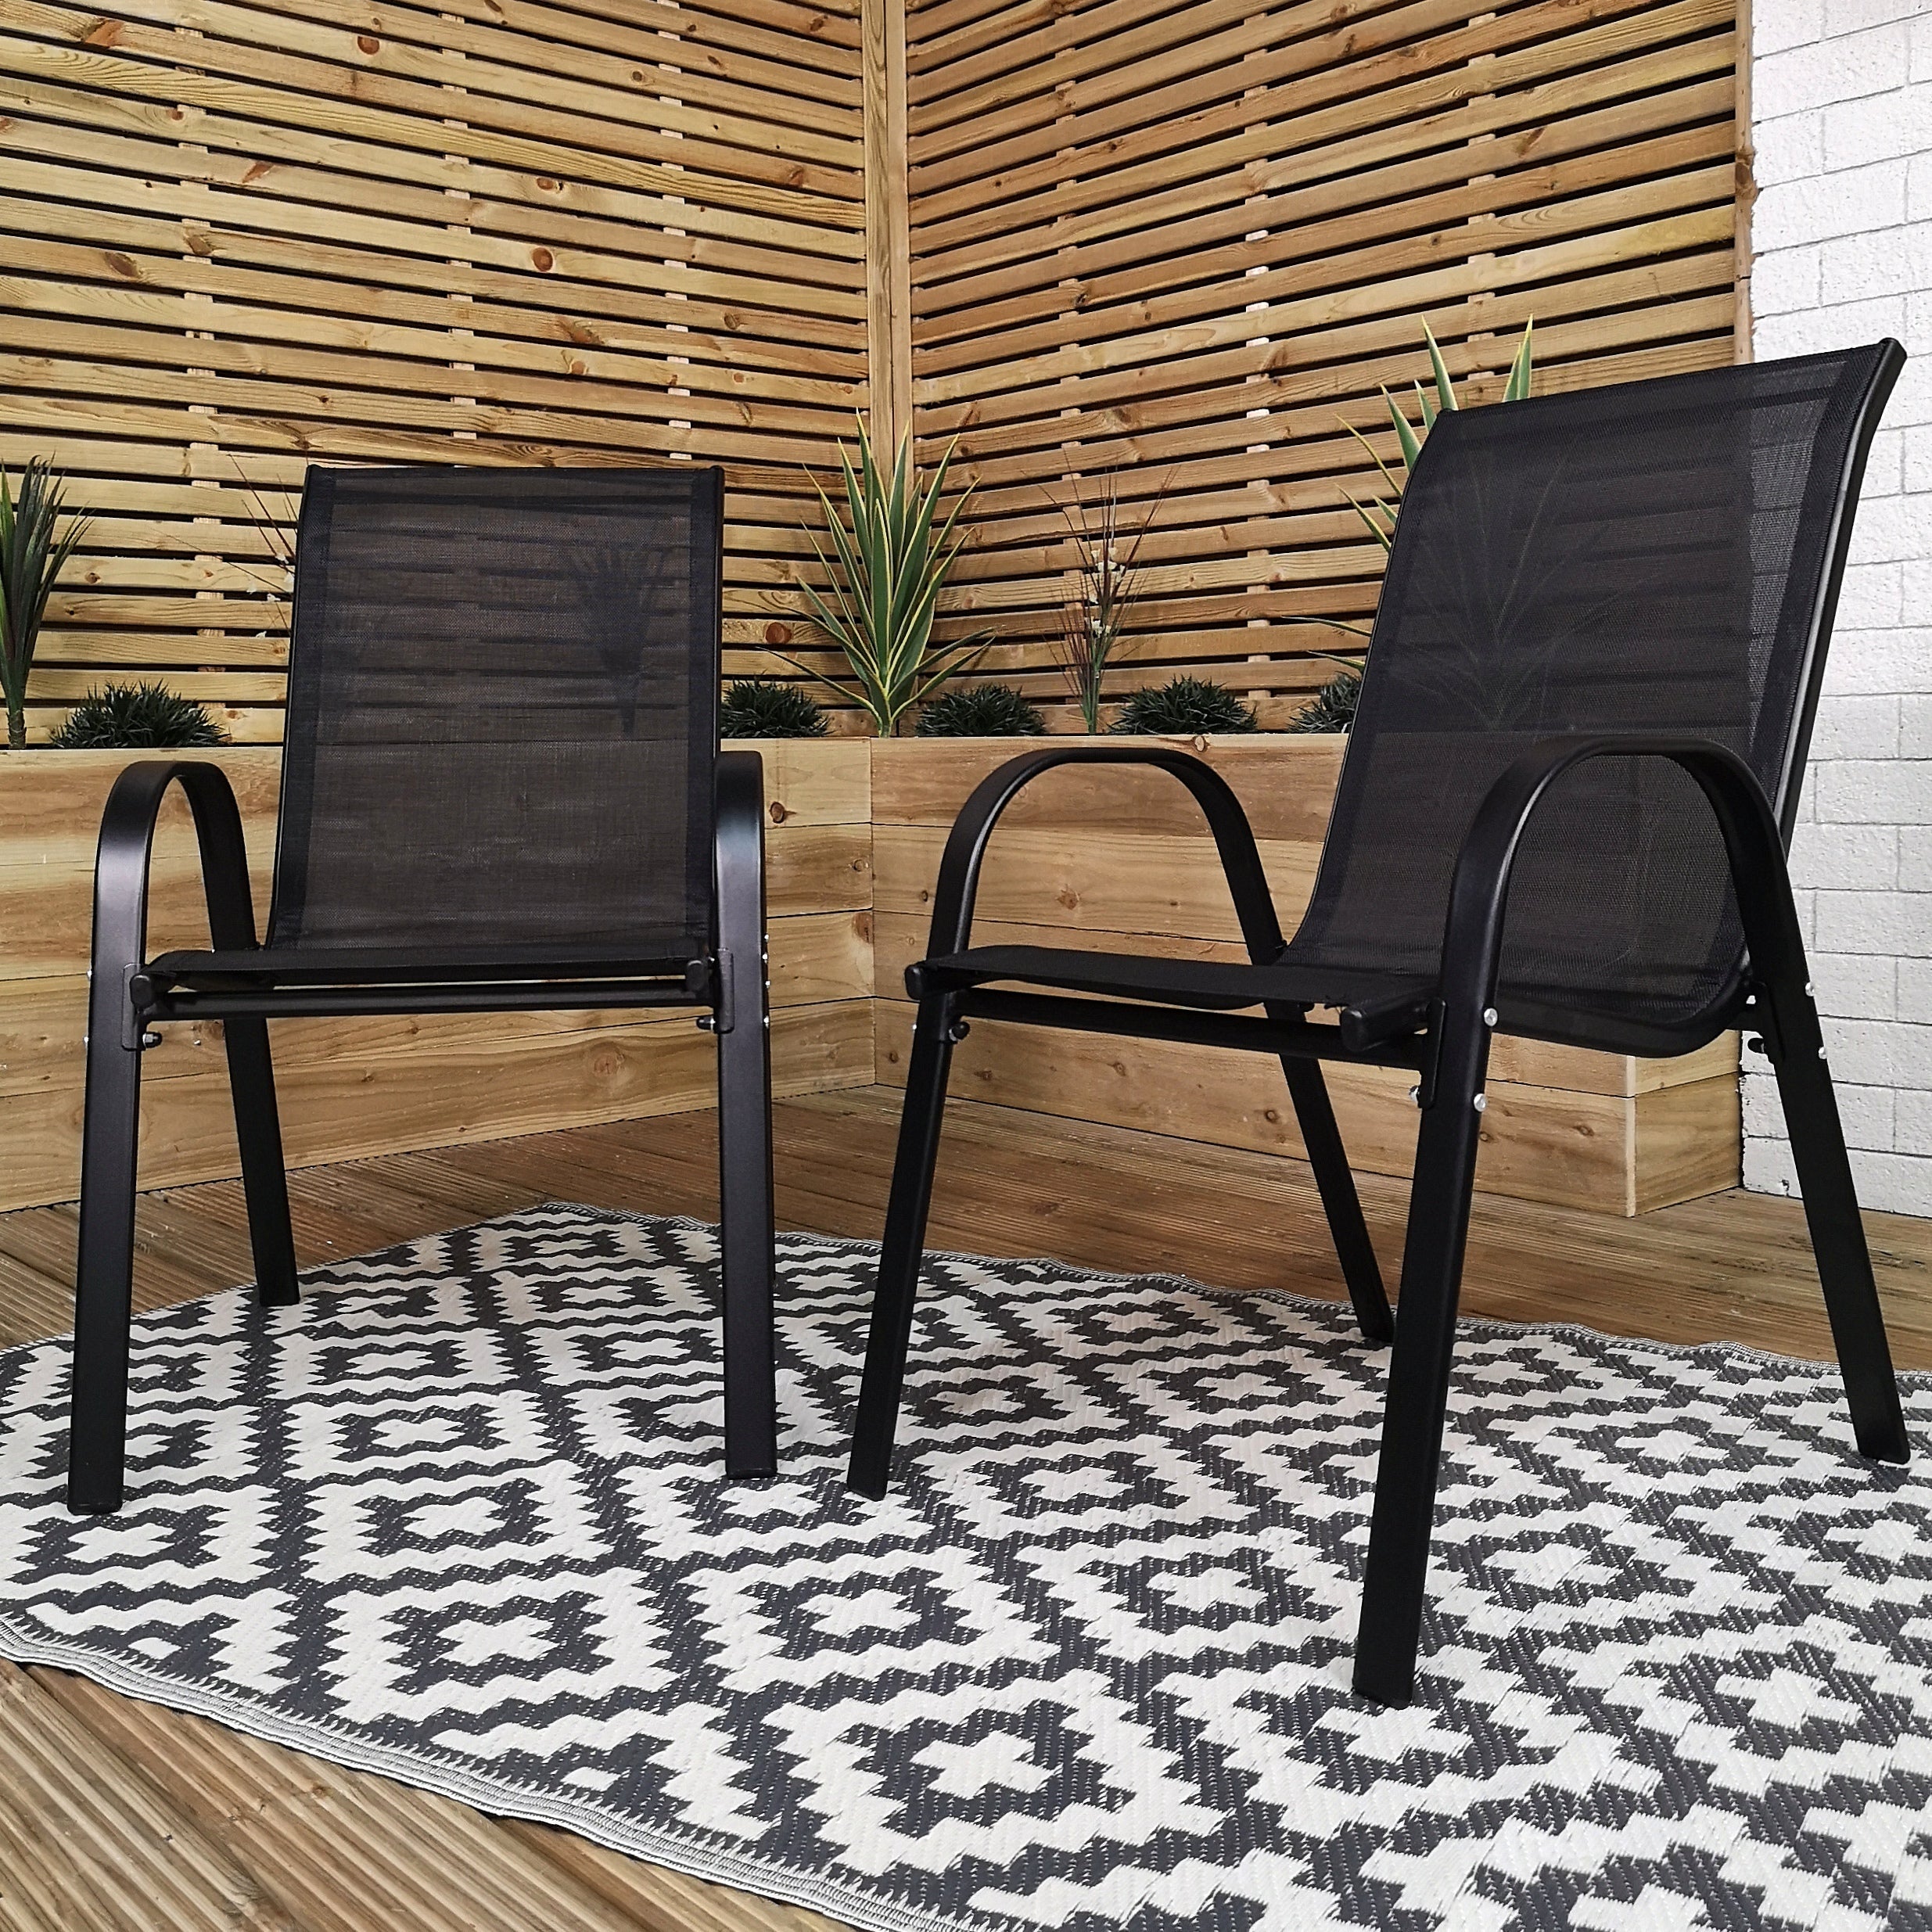 Set of 4 Outdoor Garden Patio Textilene Furniture Chairs in Black